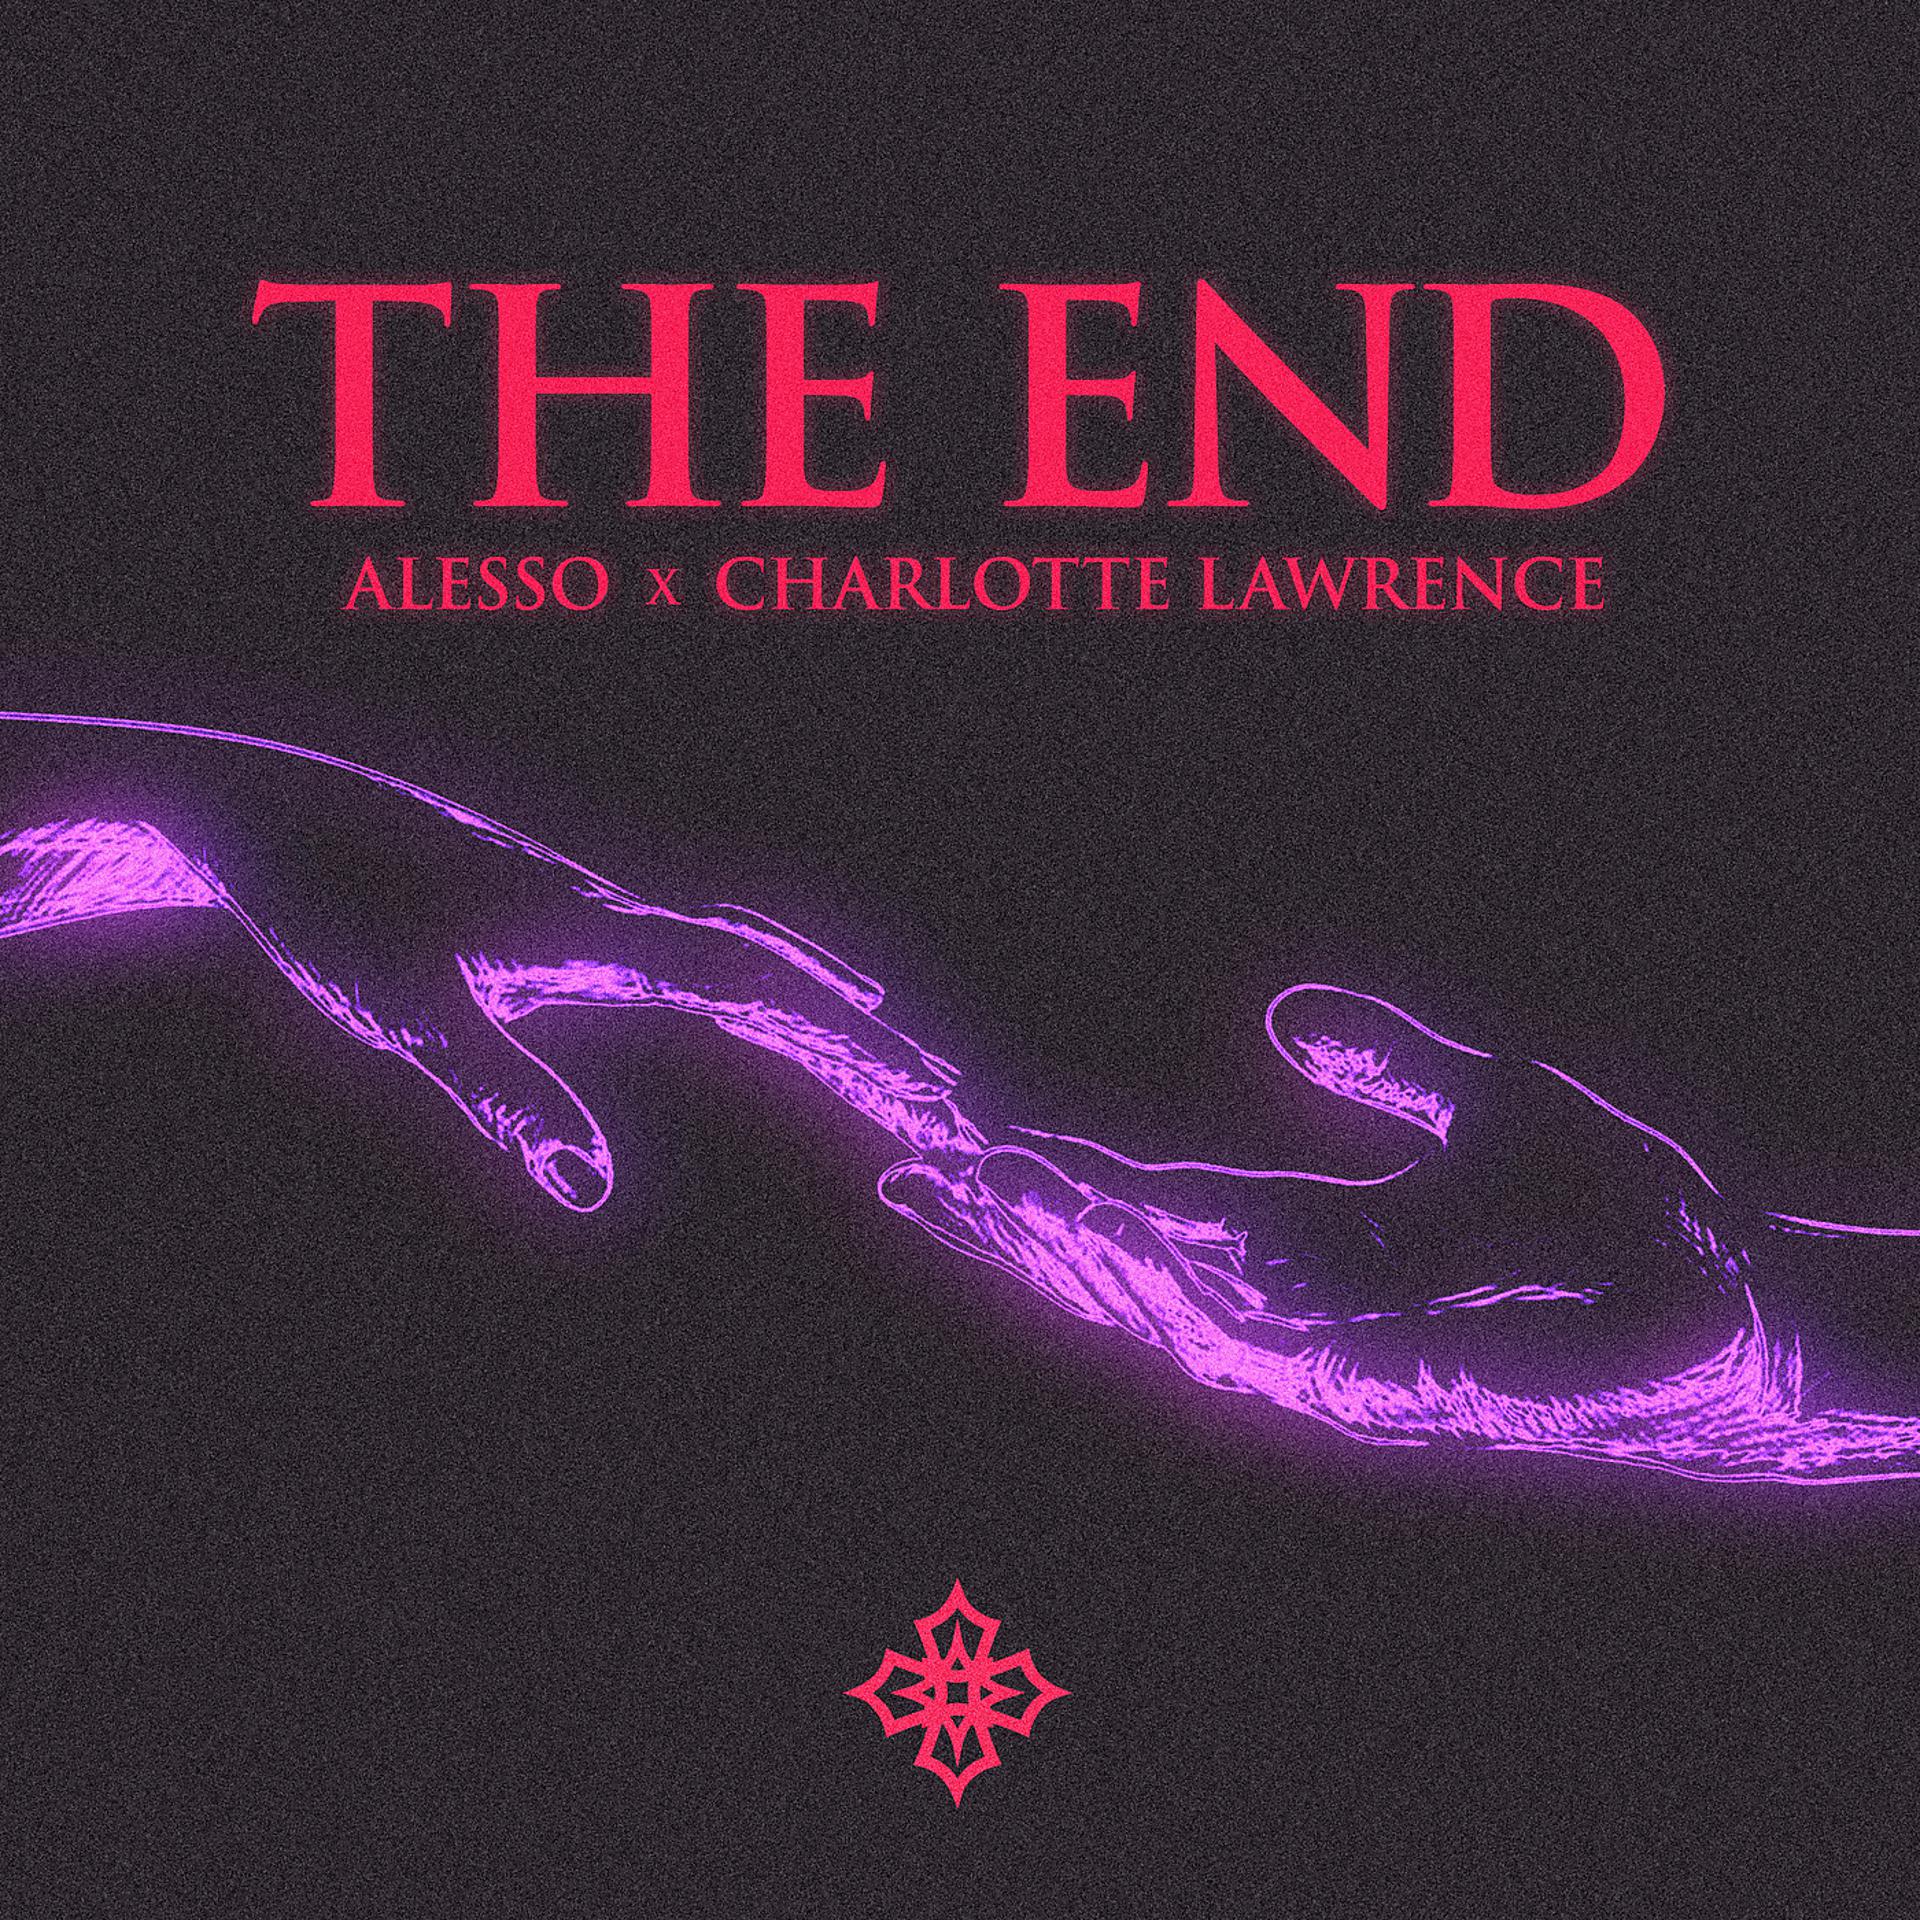 Постер к треку Alesso, Charlotte Lawrence - THE END